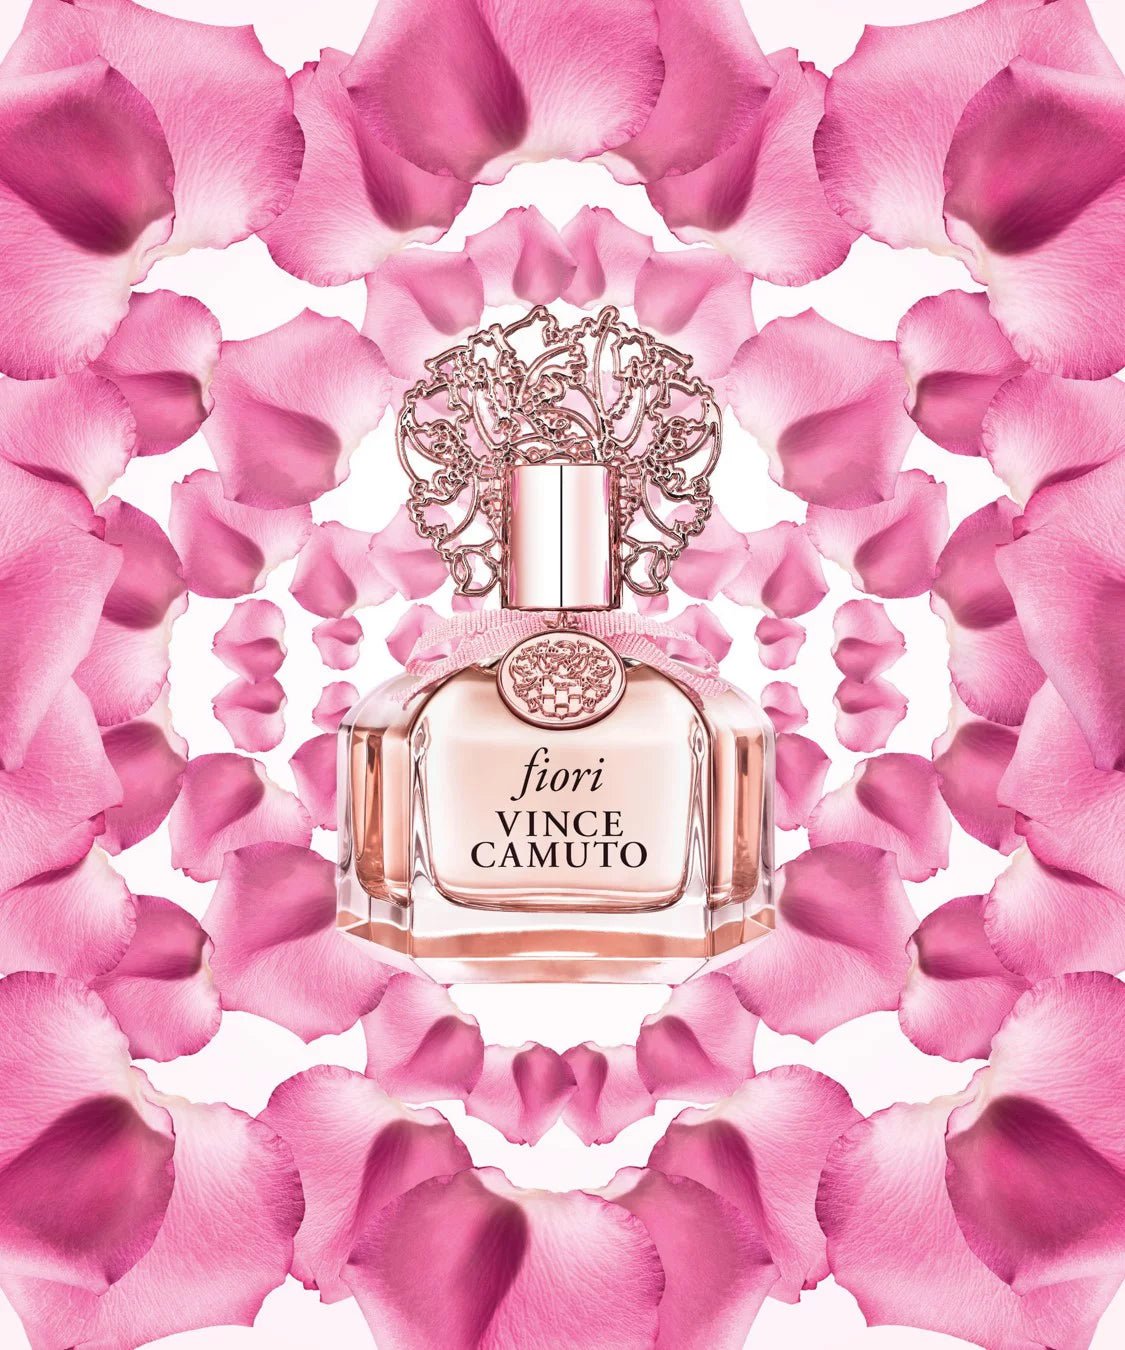 Vince Camuto Fiori For Women Body Mist | My Perfume Shop Australia